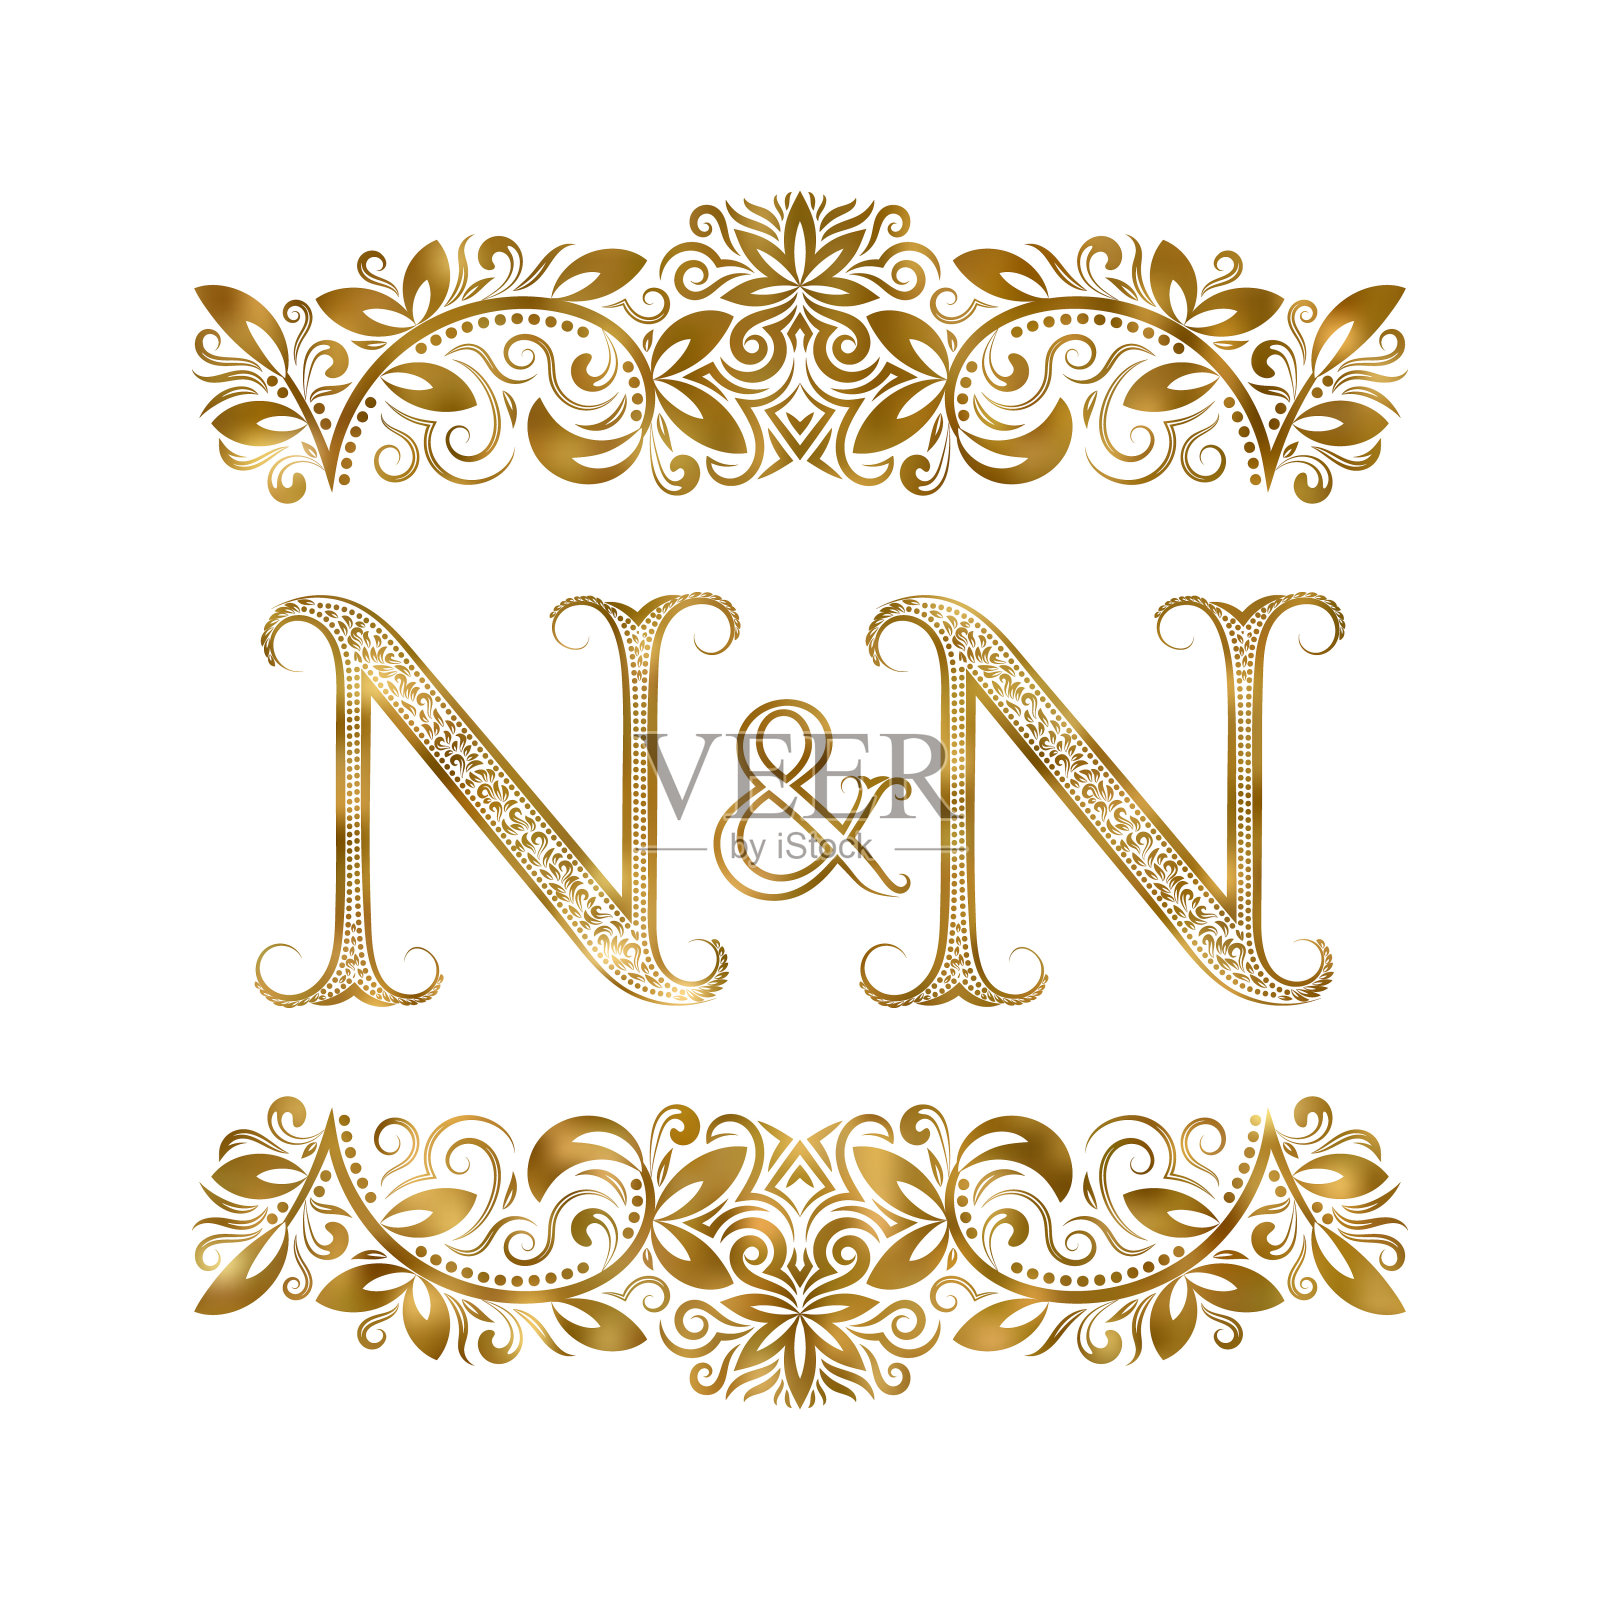 N和N复古首字母符号。字母周围有装饰元素。皇室风格的婚礼或商业伙伴的字母组合。插画图片素材